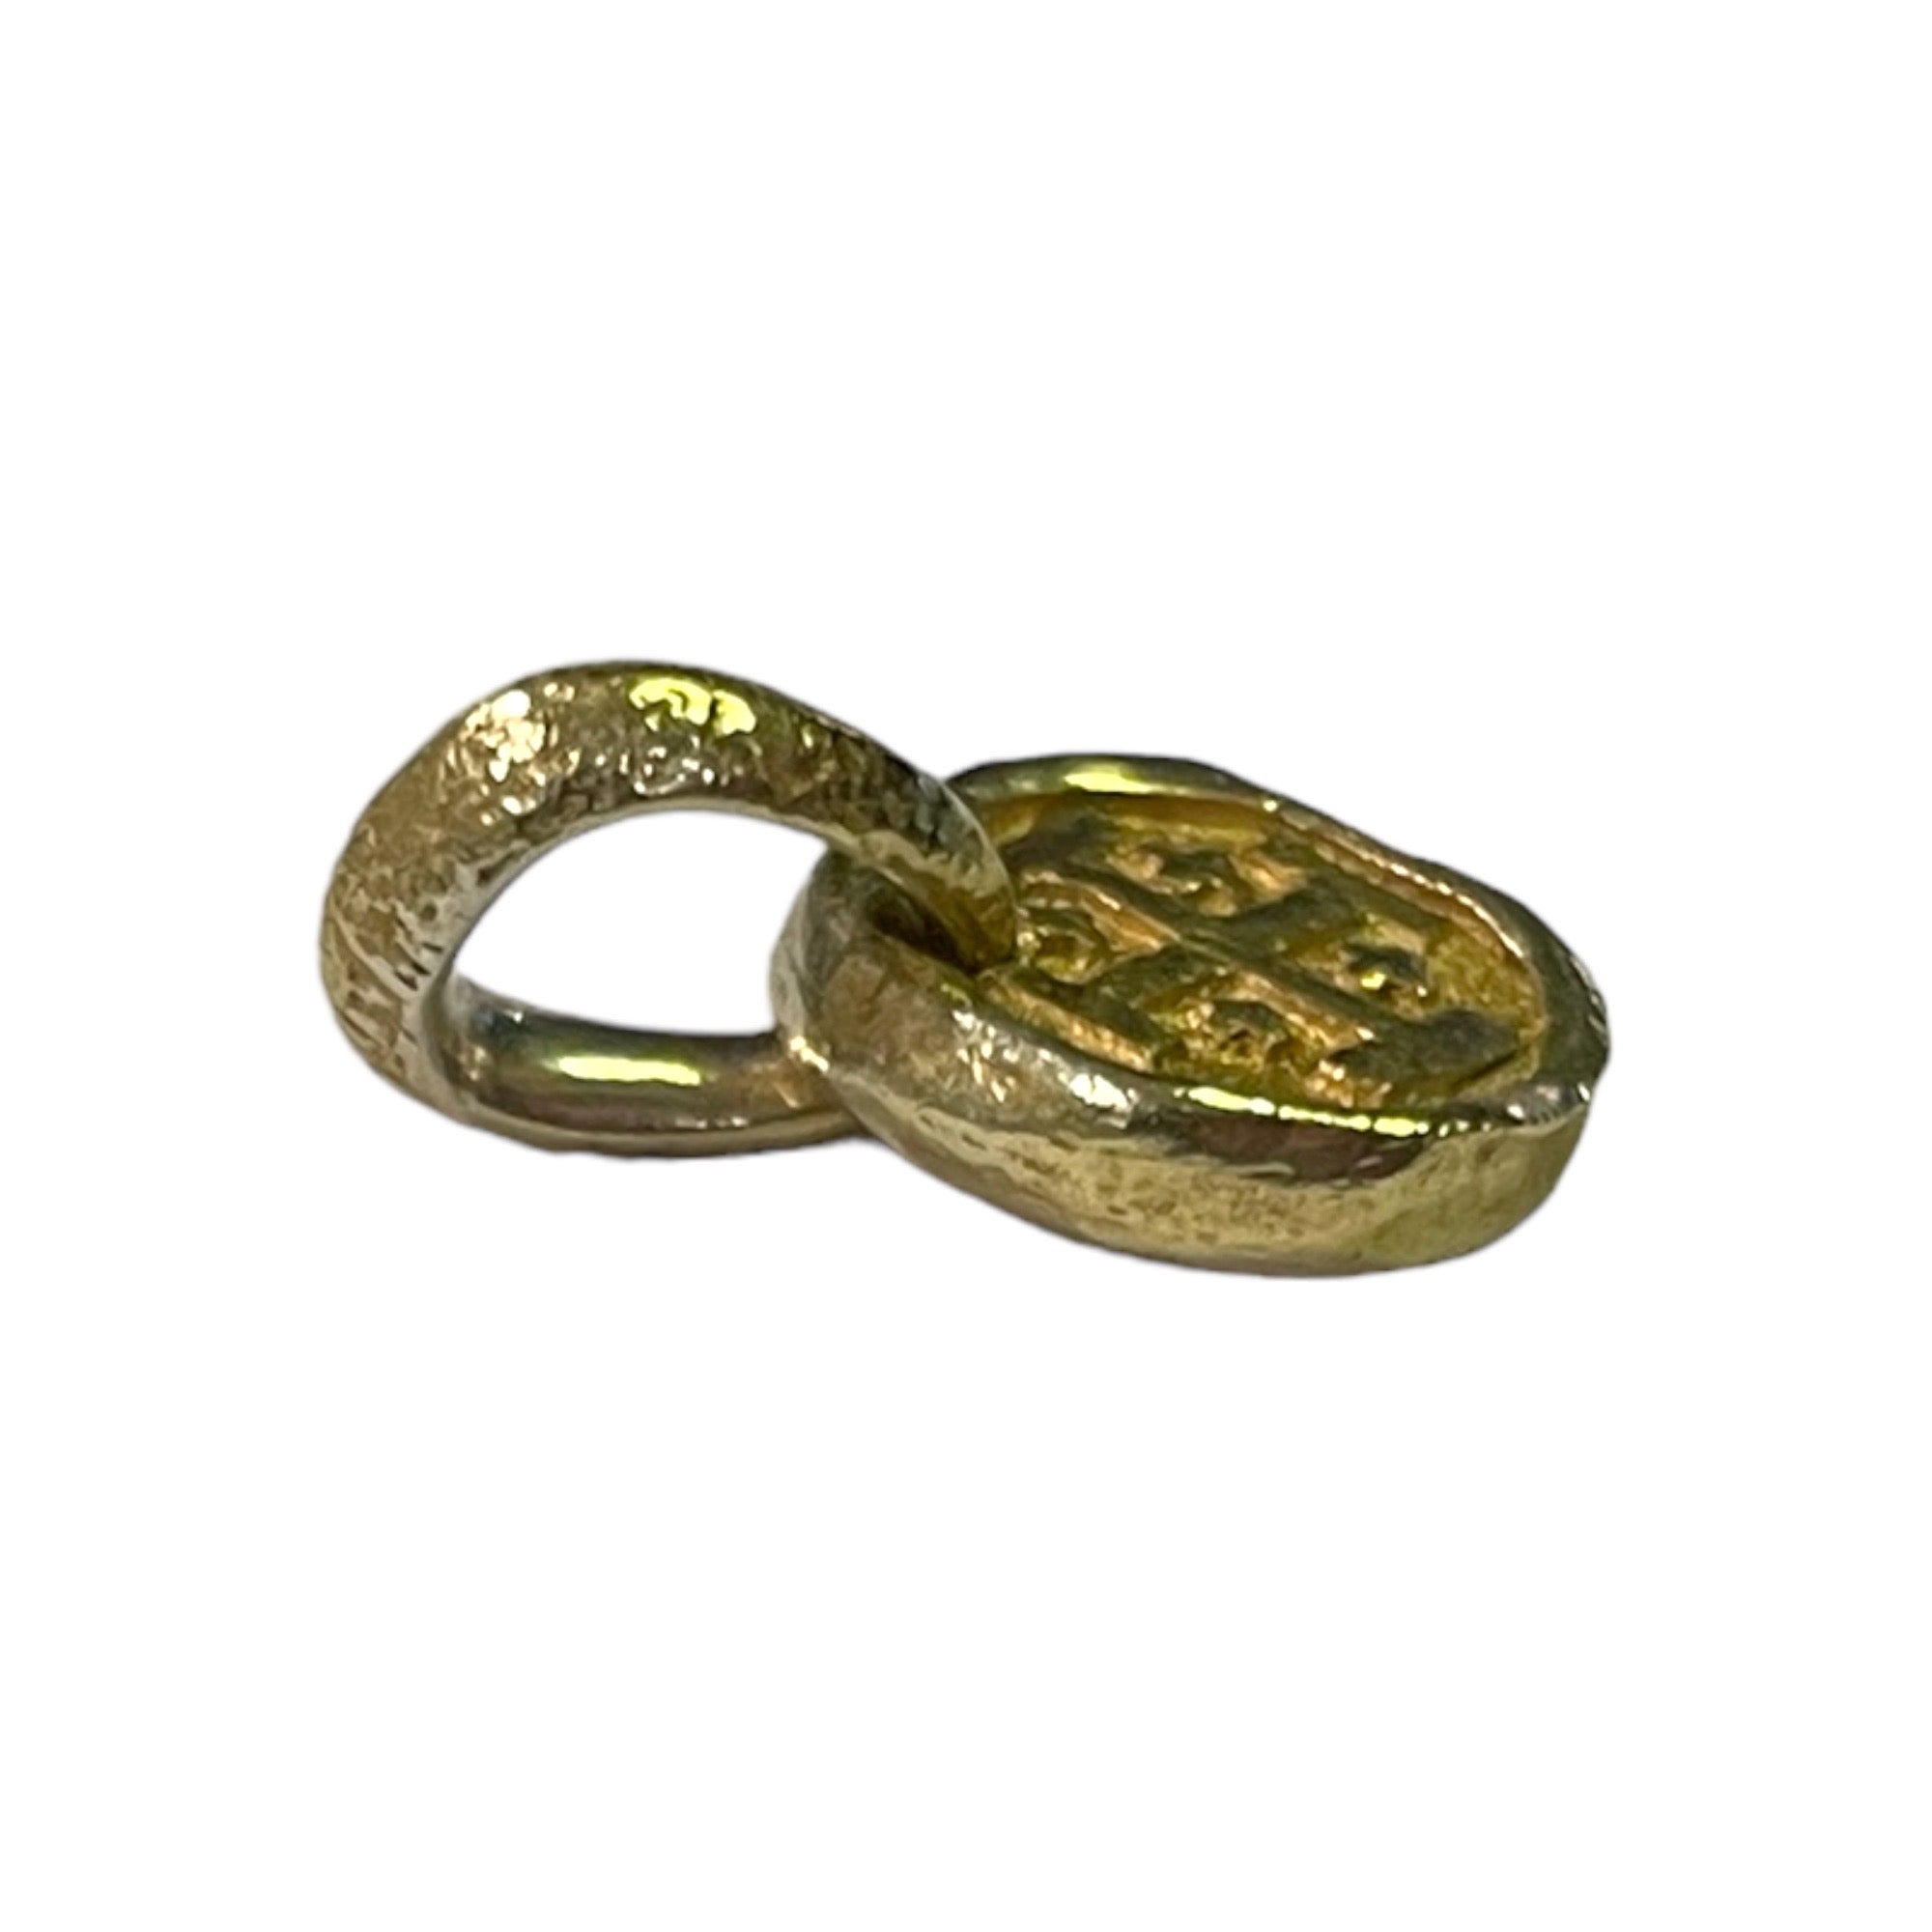 DAVID YURMAN Shipwreck Coin Amulet 22K Yellow Gold (17mm)